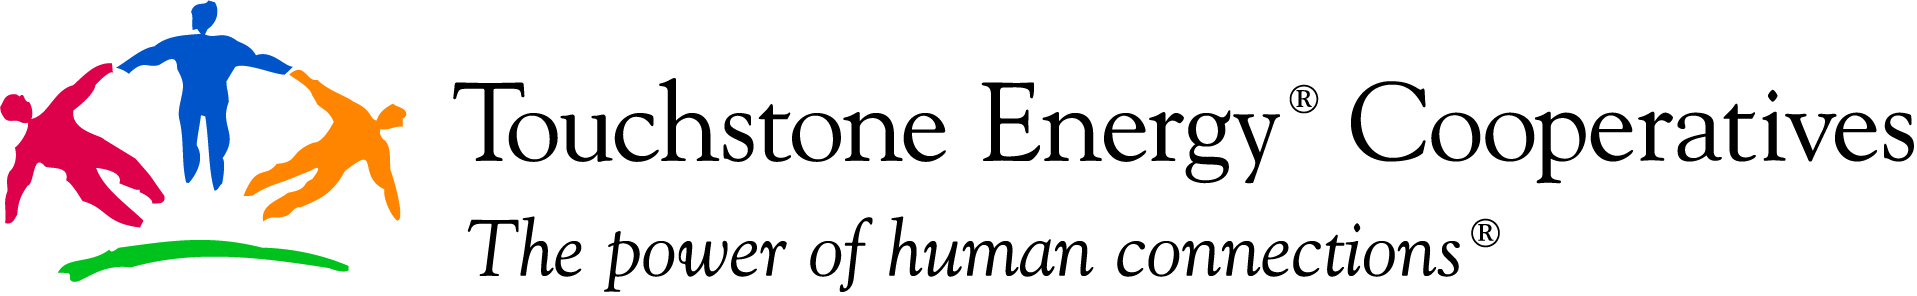 Touchstone Energy Cooperatives logo